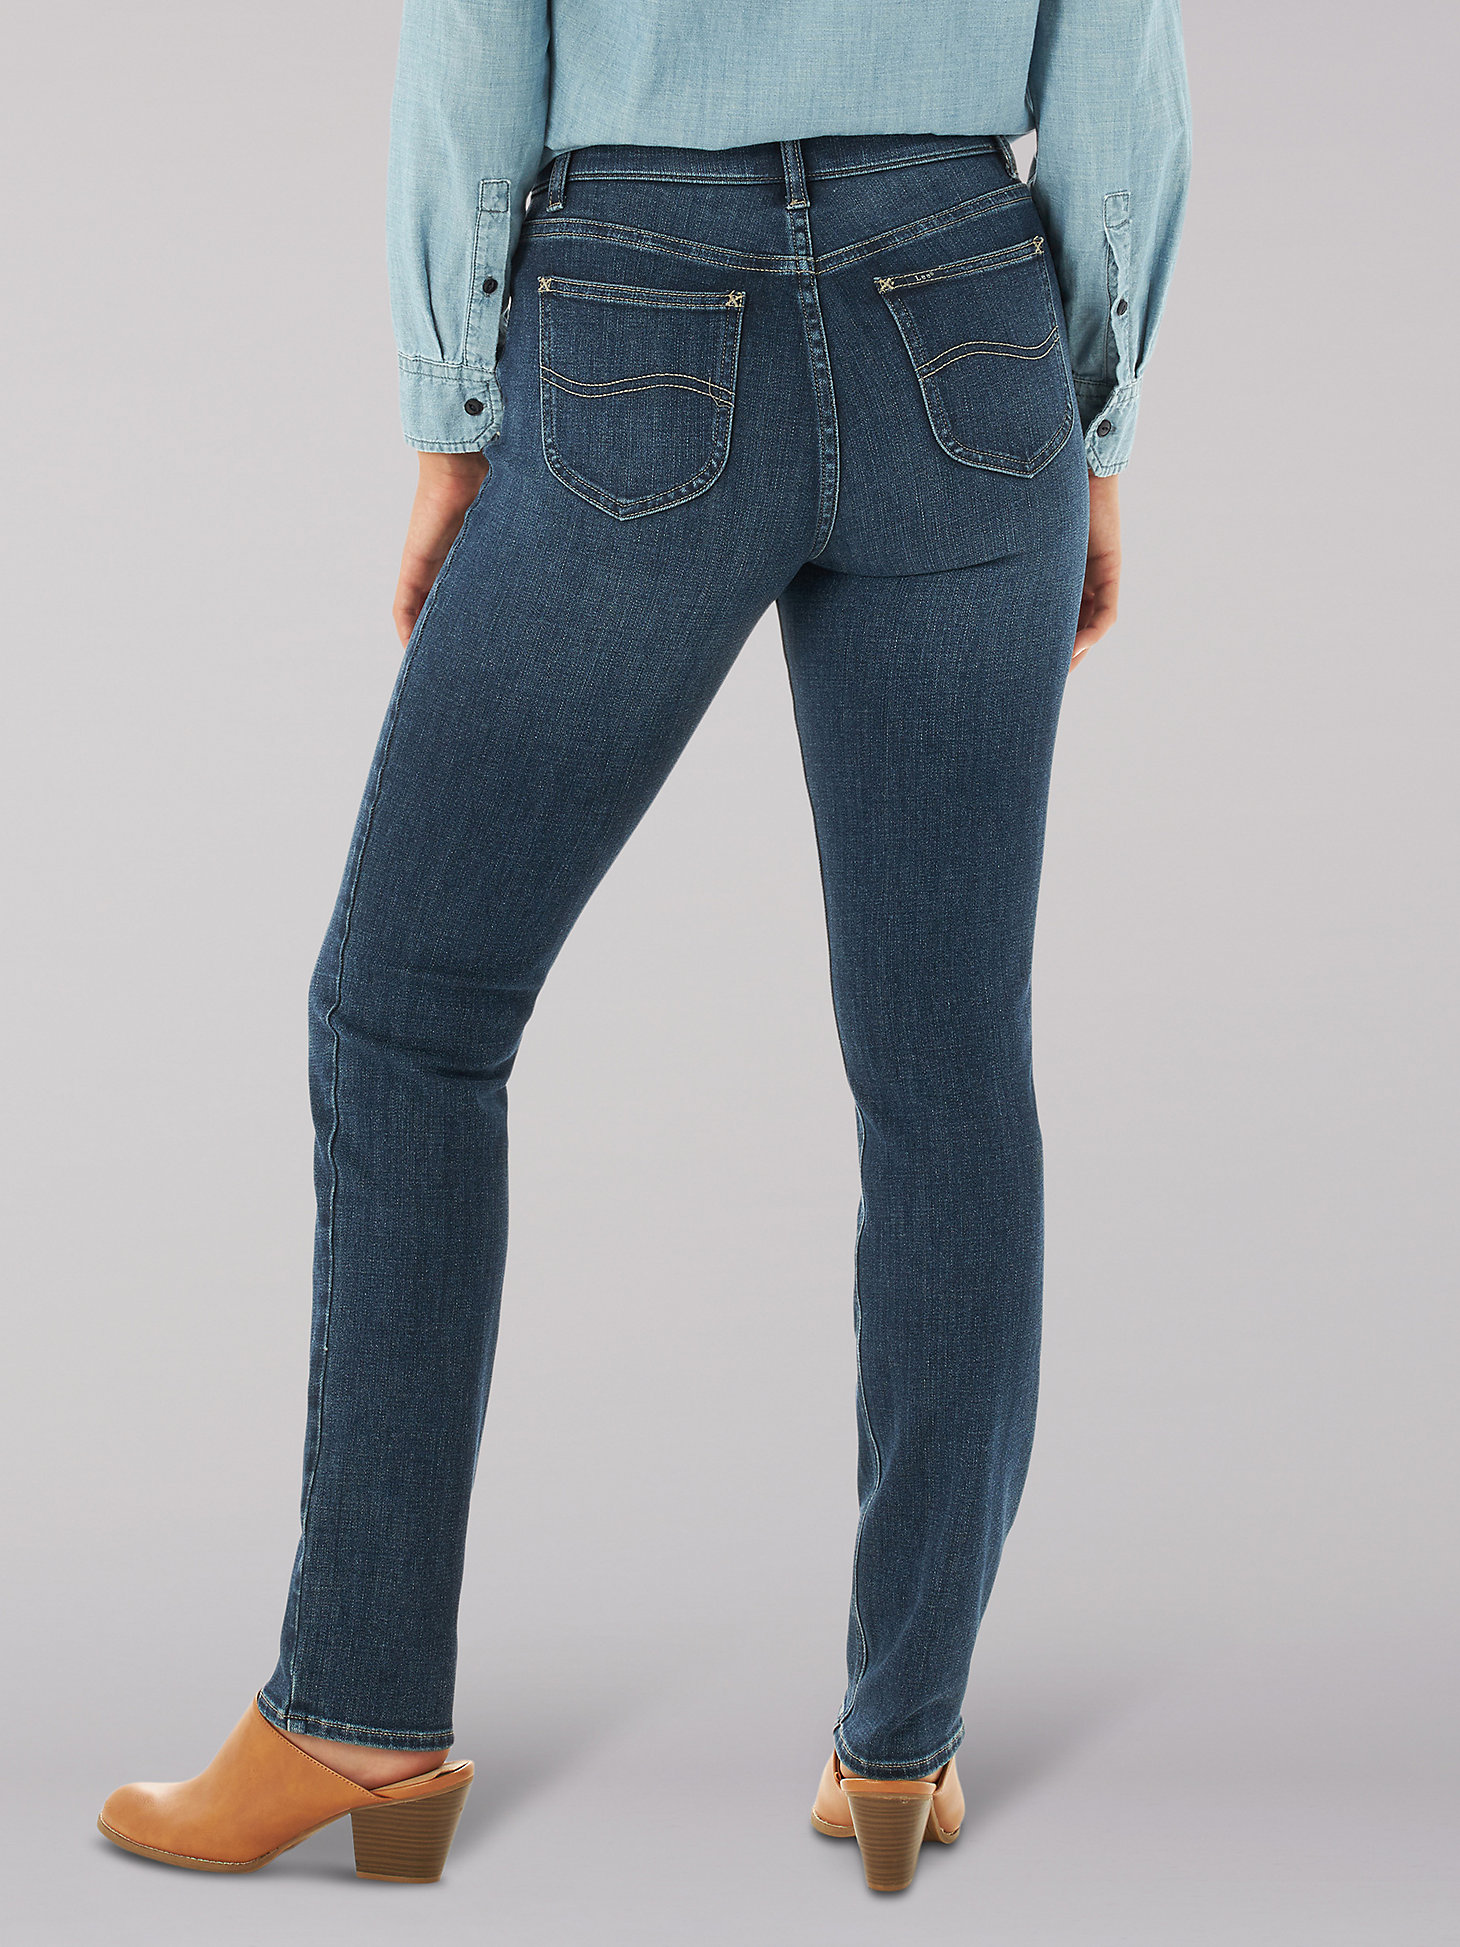 Women's Ultra Lux Comfort Slim Straight Jean (Petite) in Celestial alternative view 1